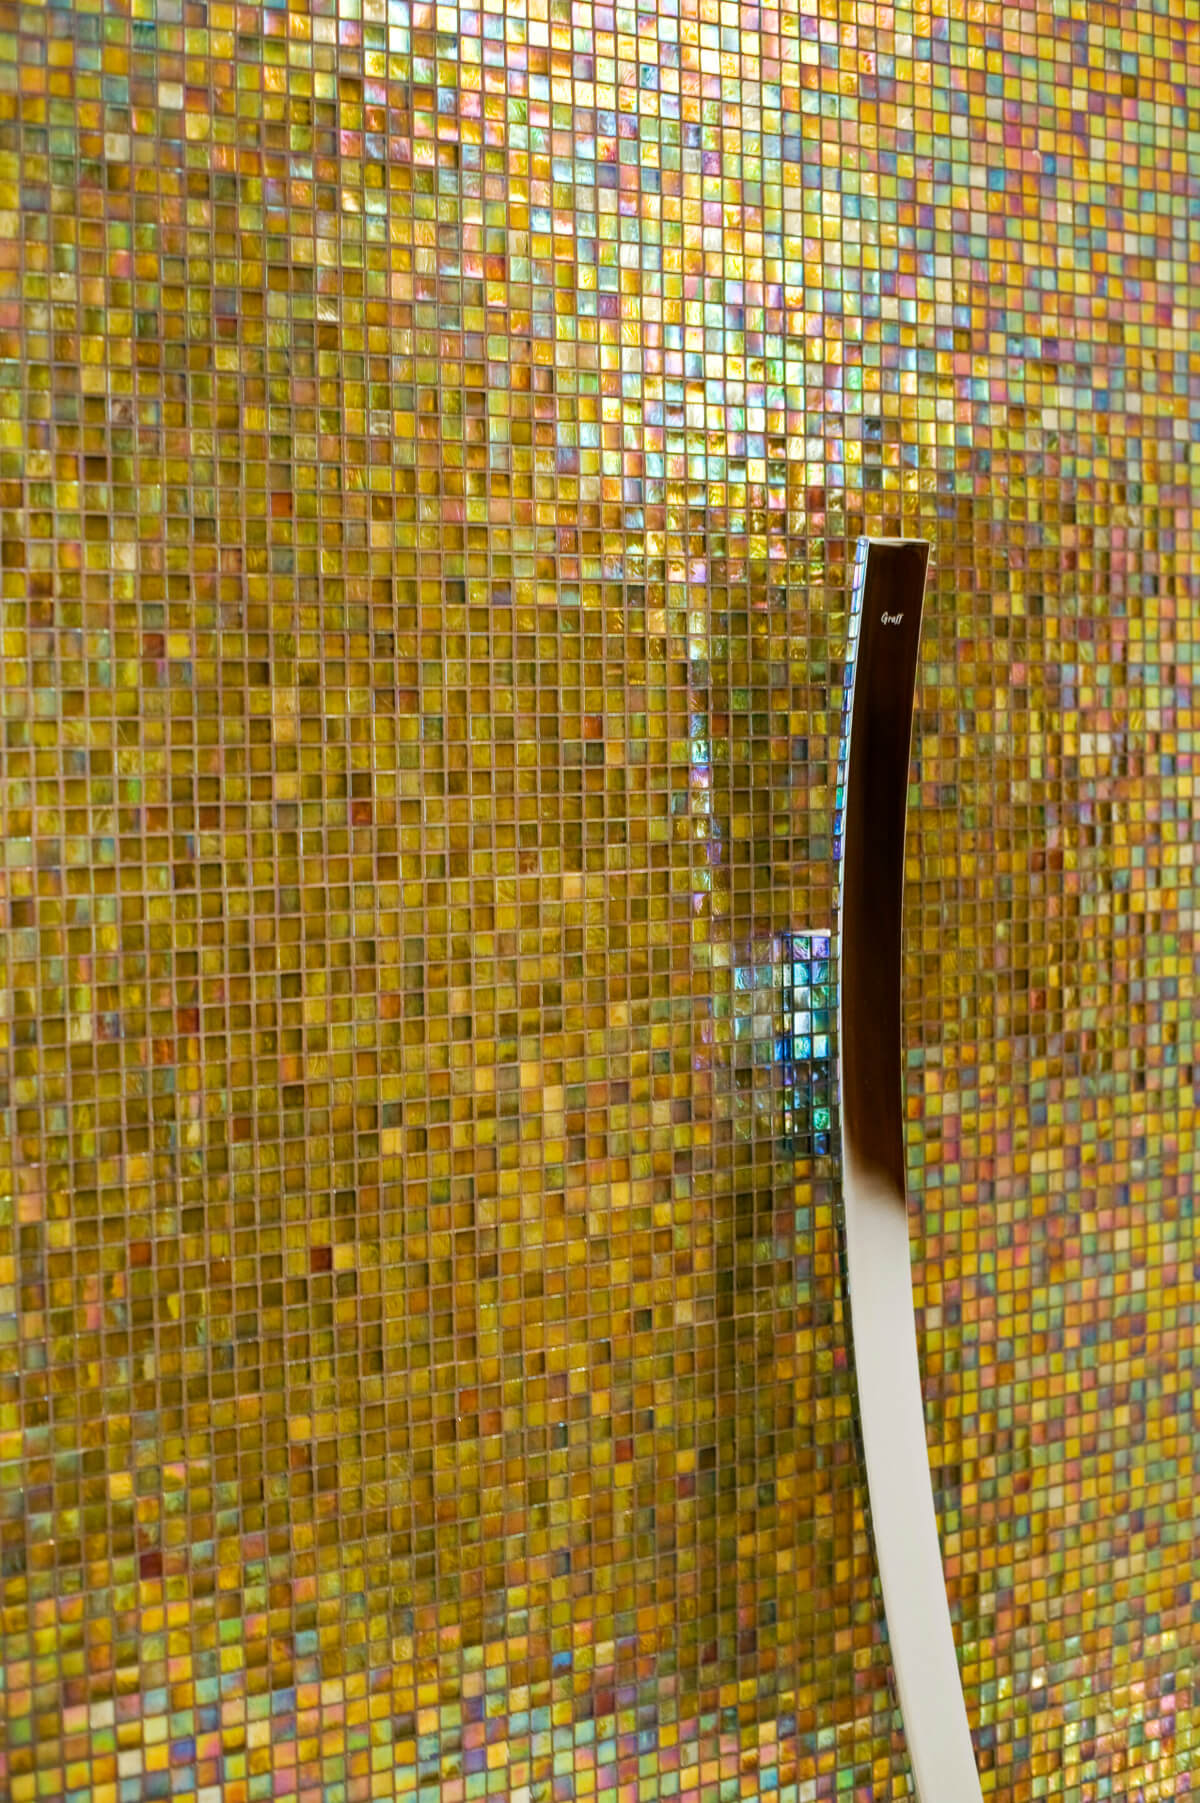 Metallic Bar on a Yellow Tone Mosaic Tile Wall